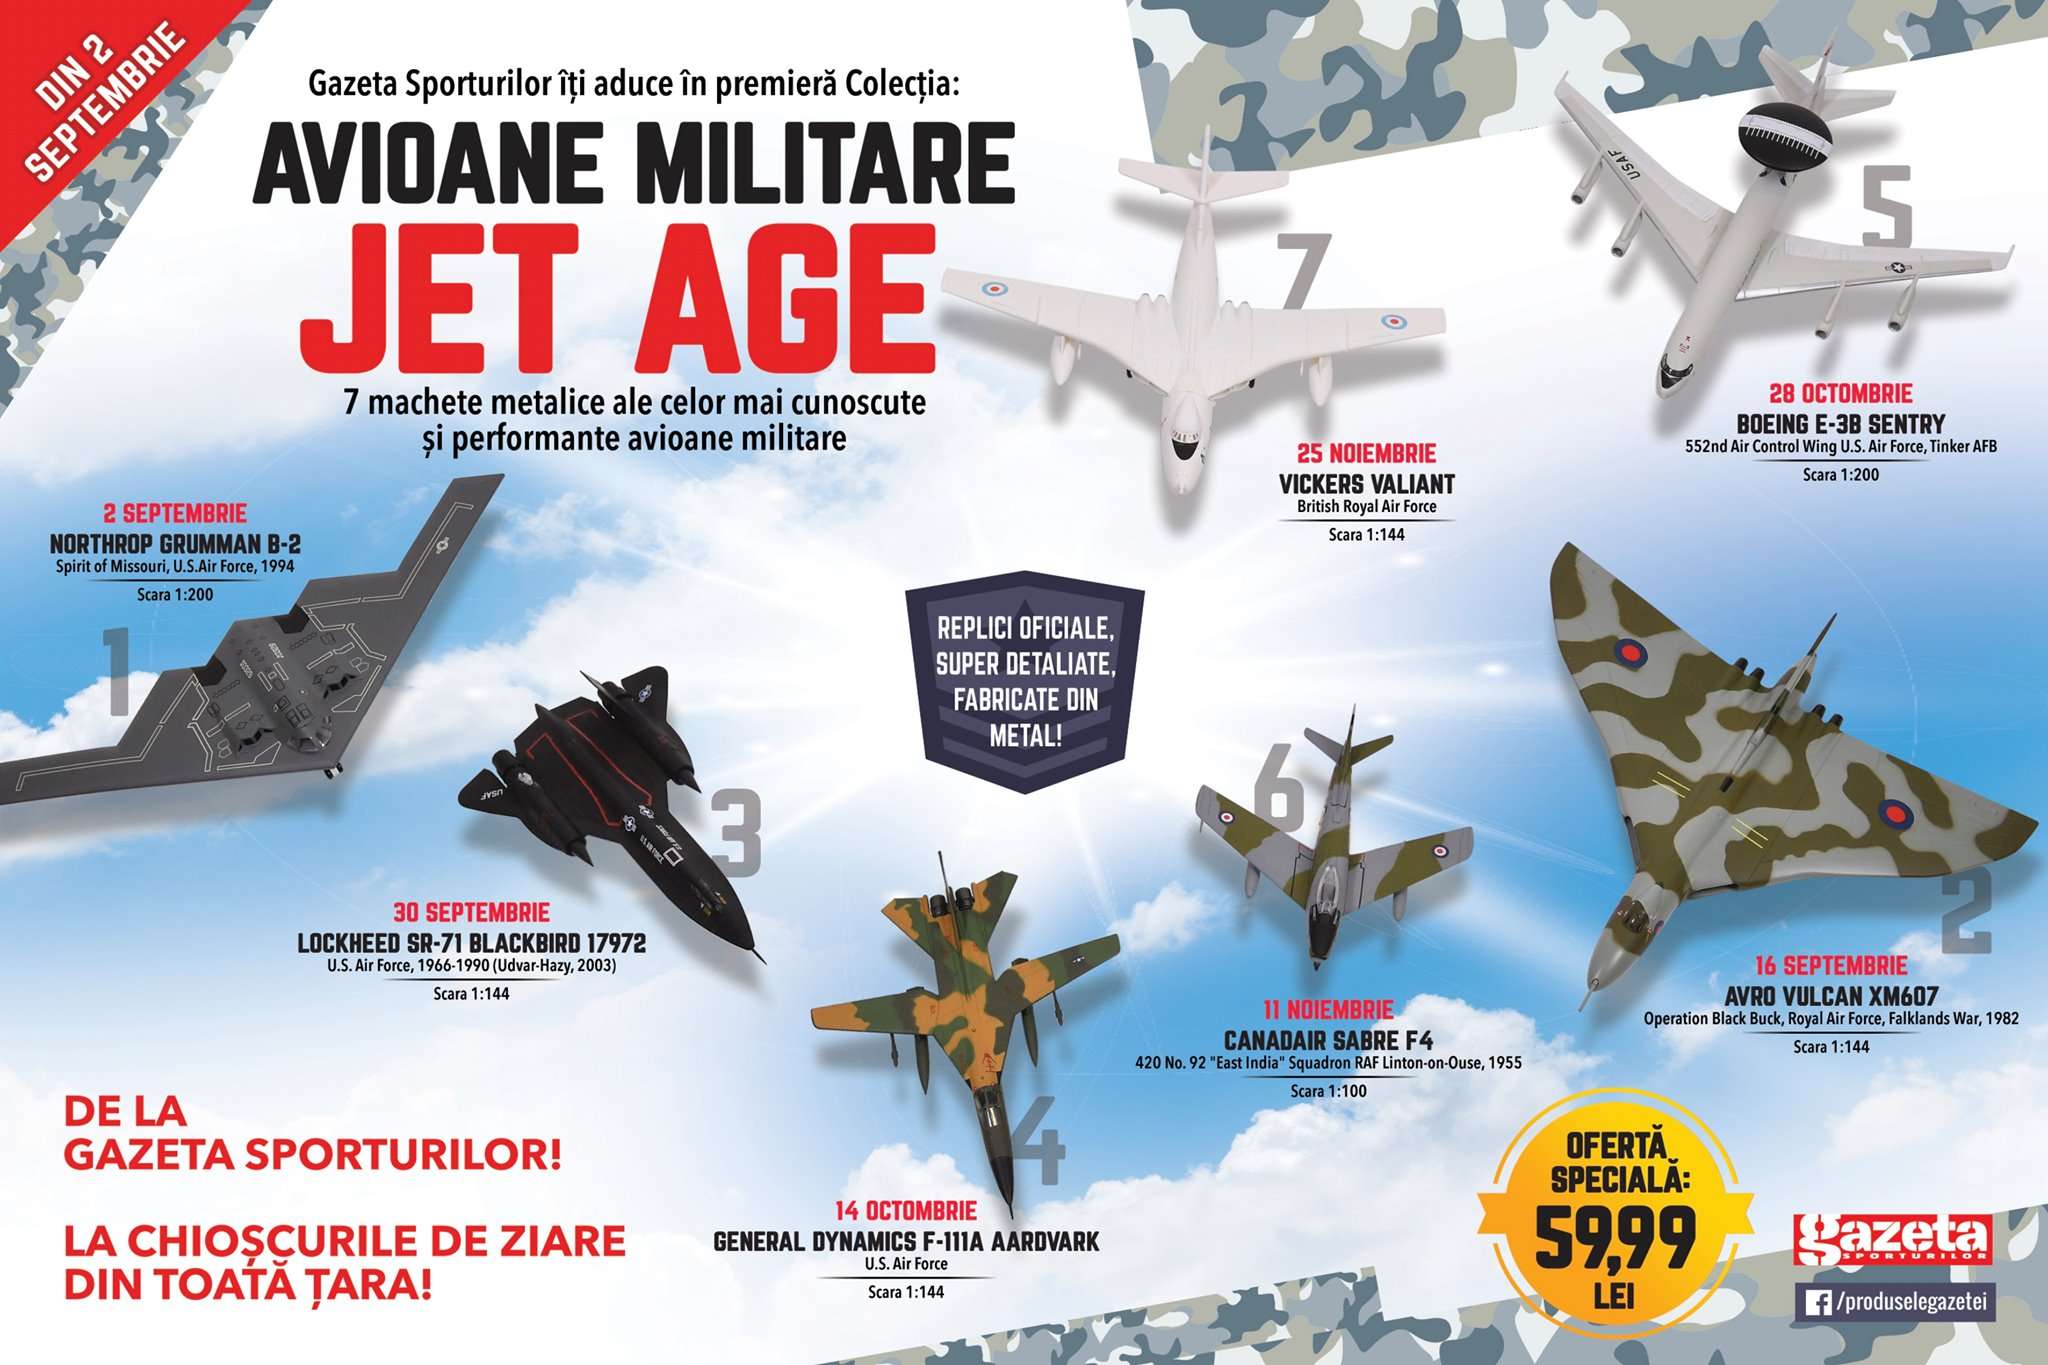 Avioane Militare Jet Age